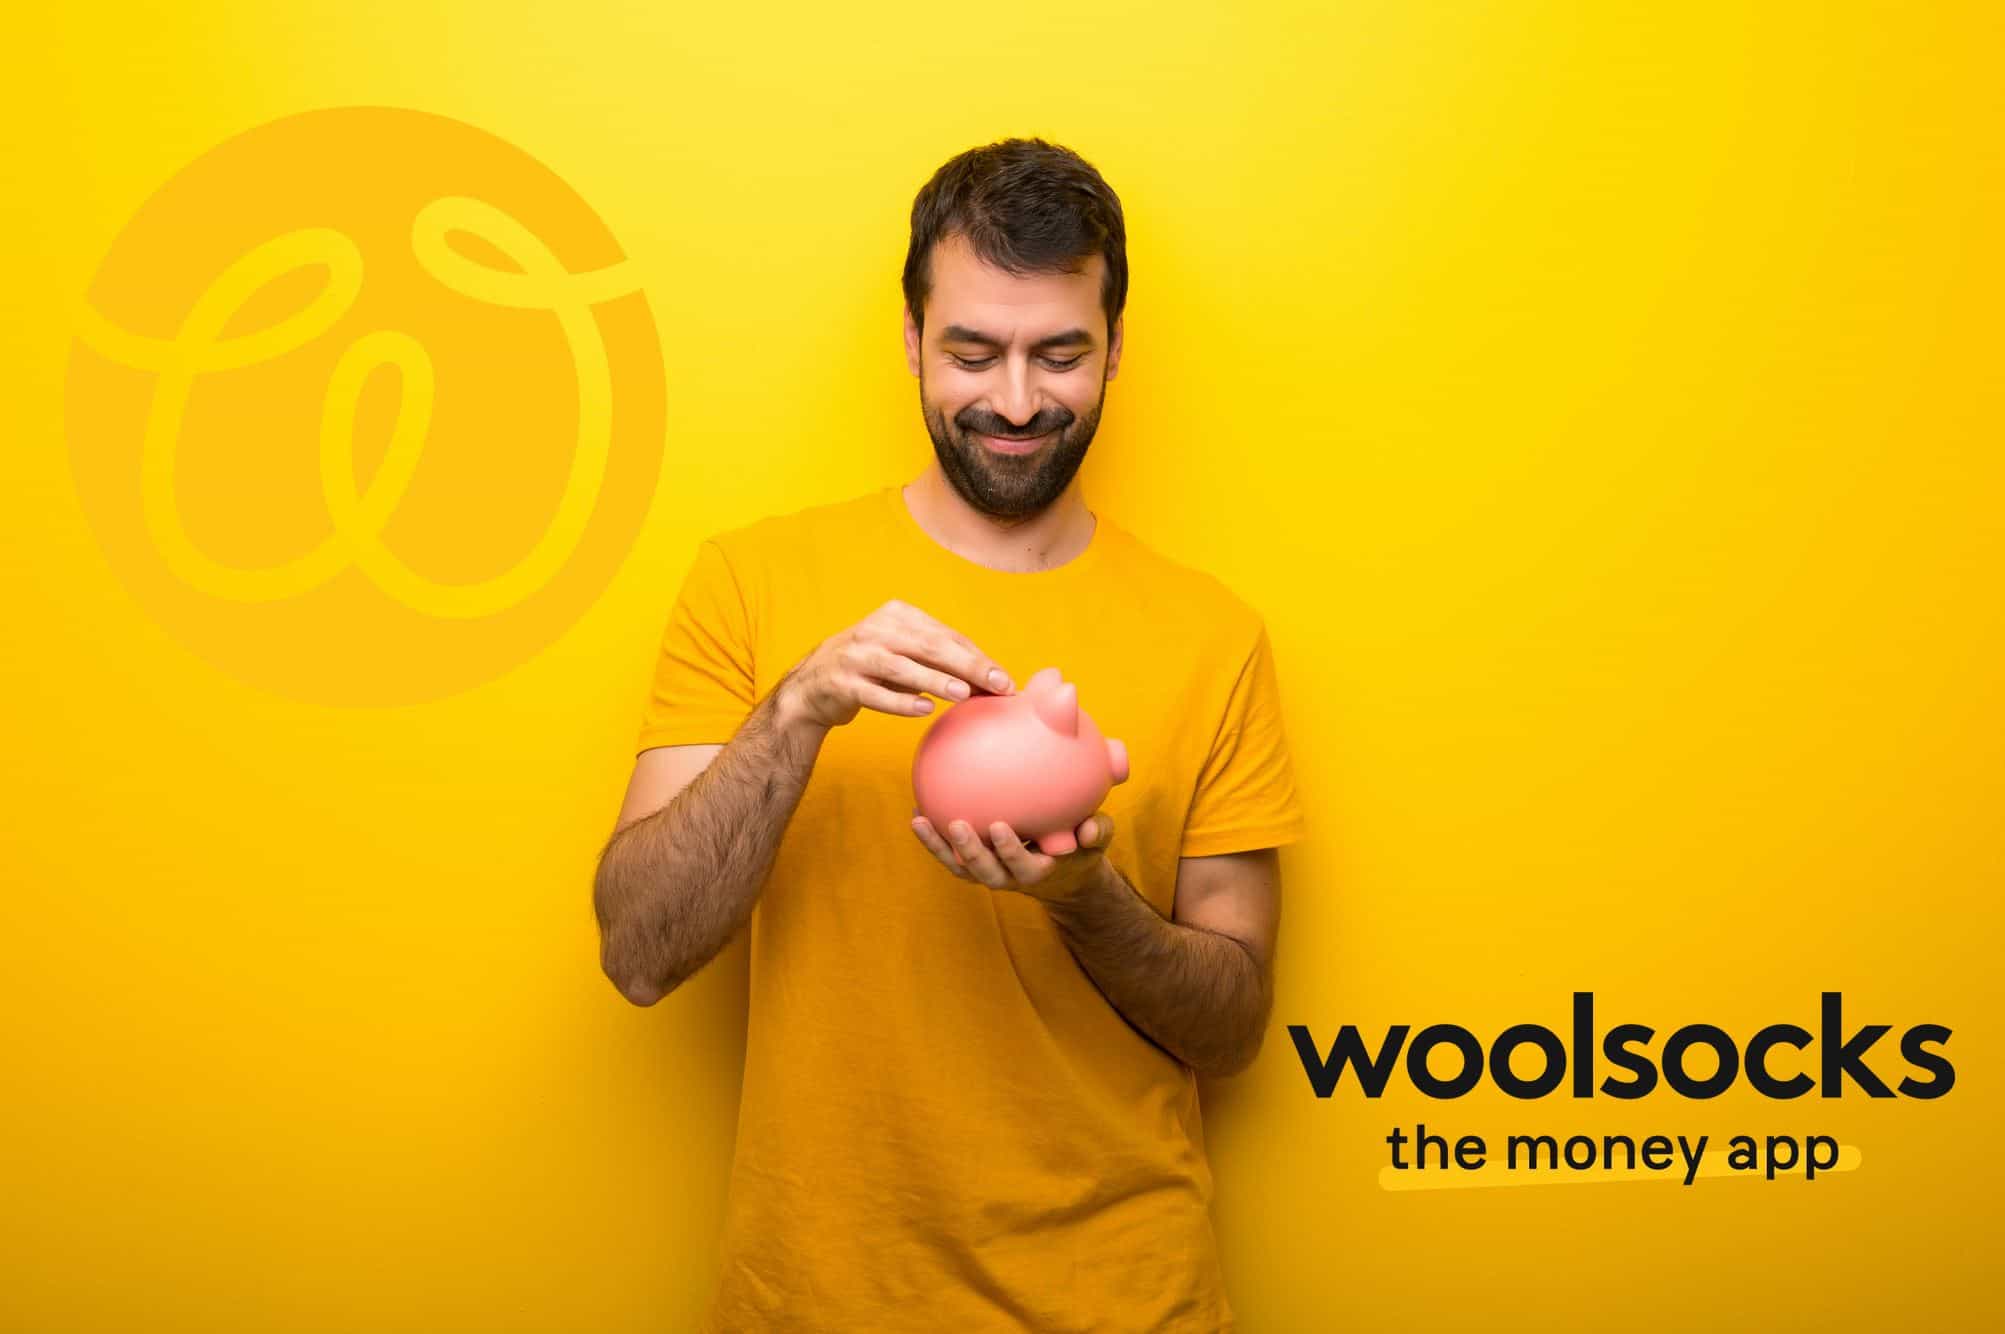 woolsocks app erfahrungen the money app cashback investorsapiens.de